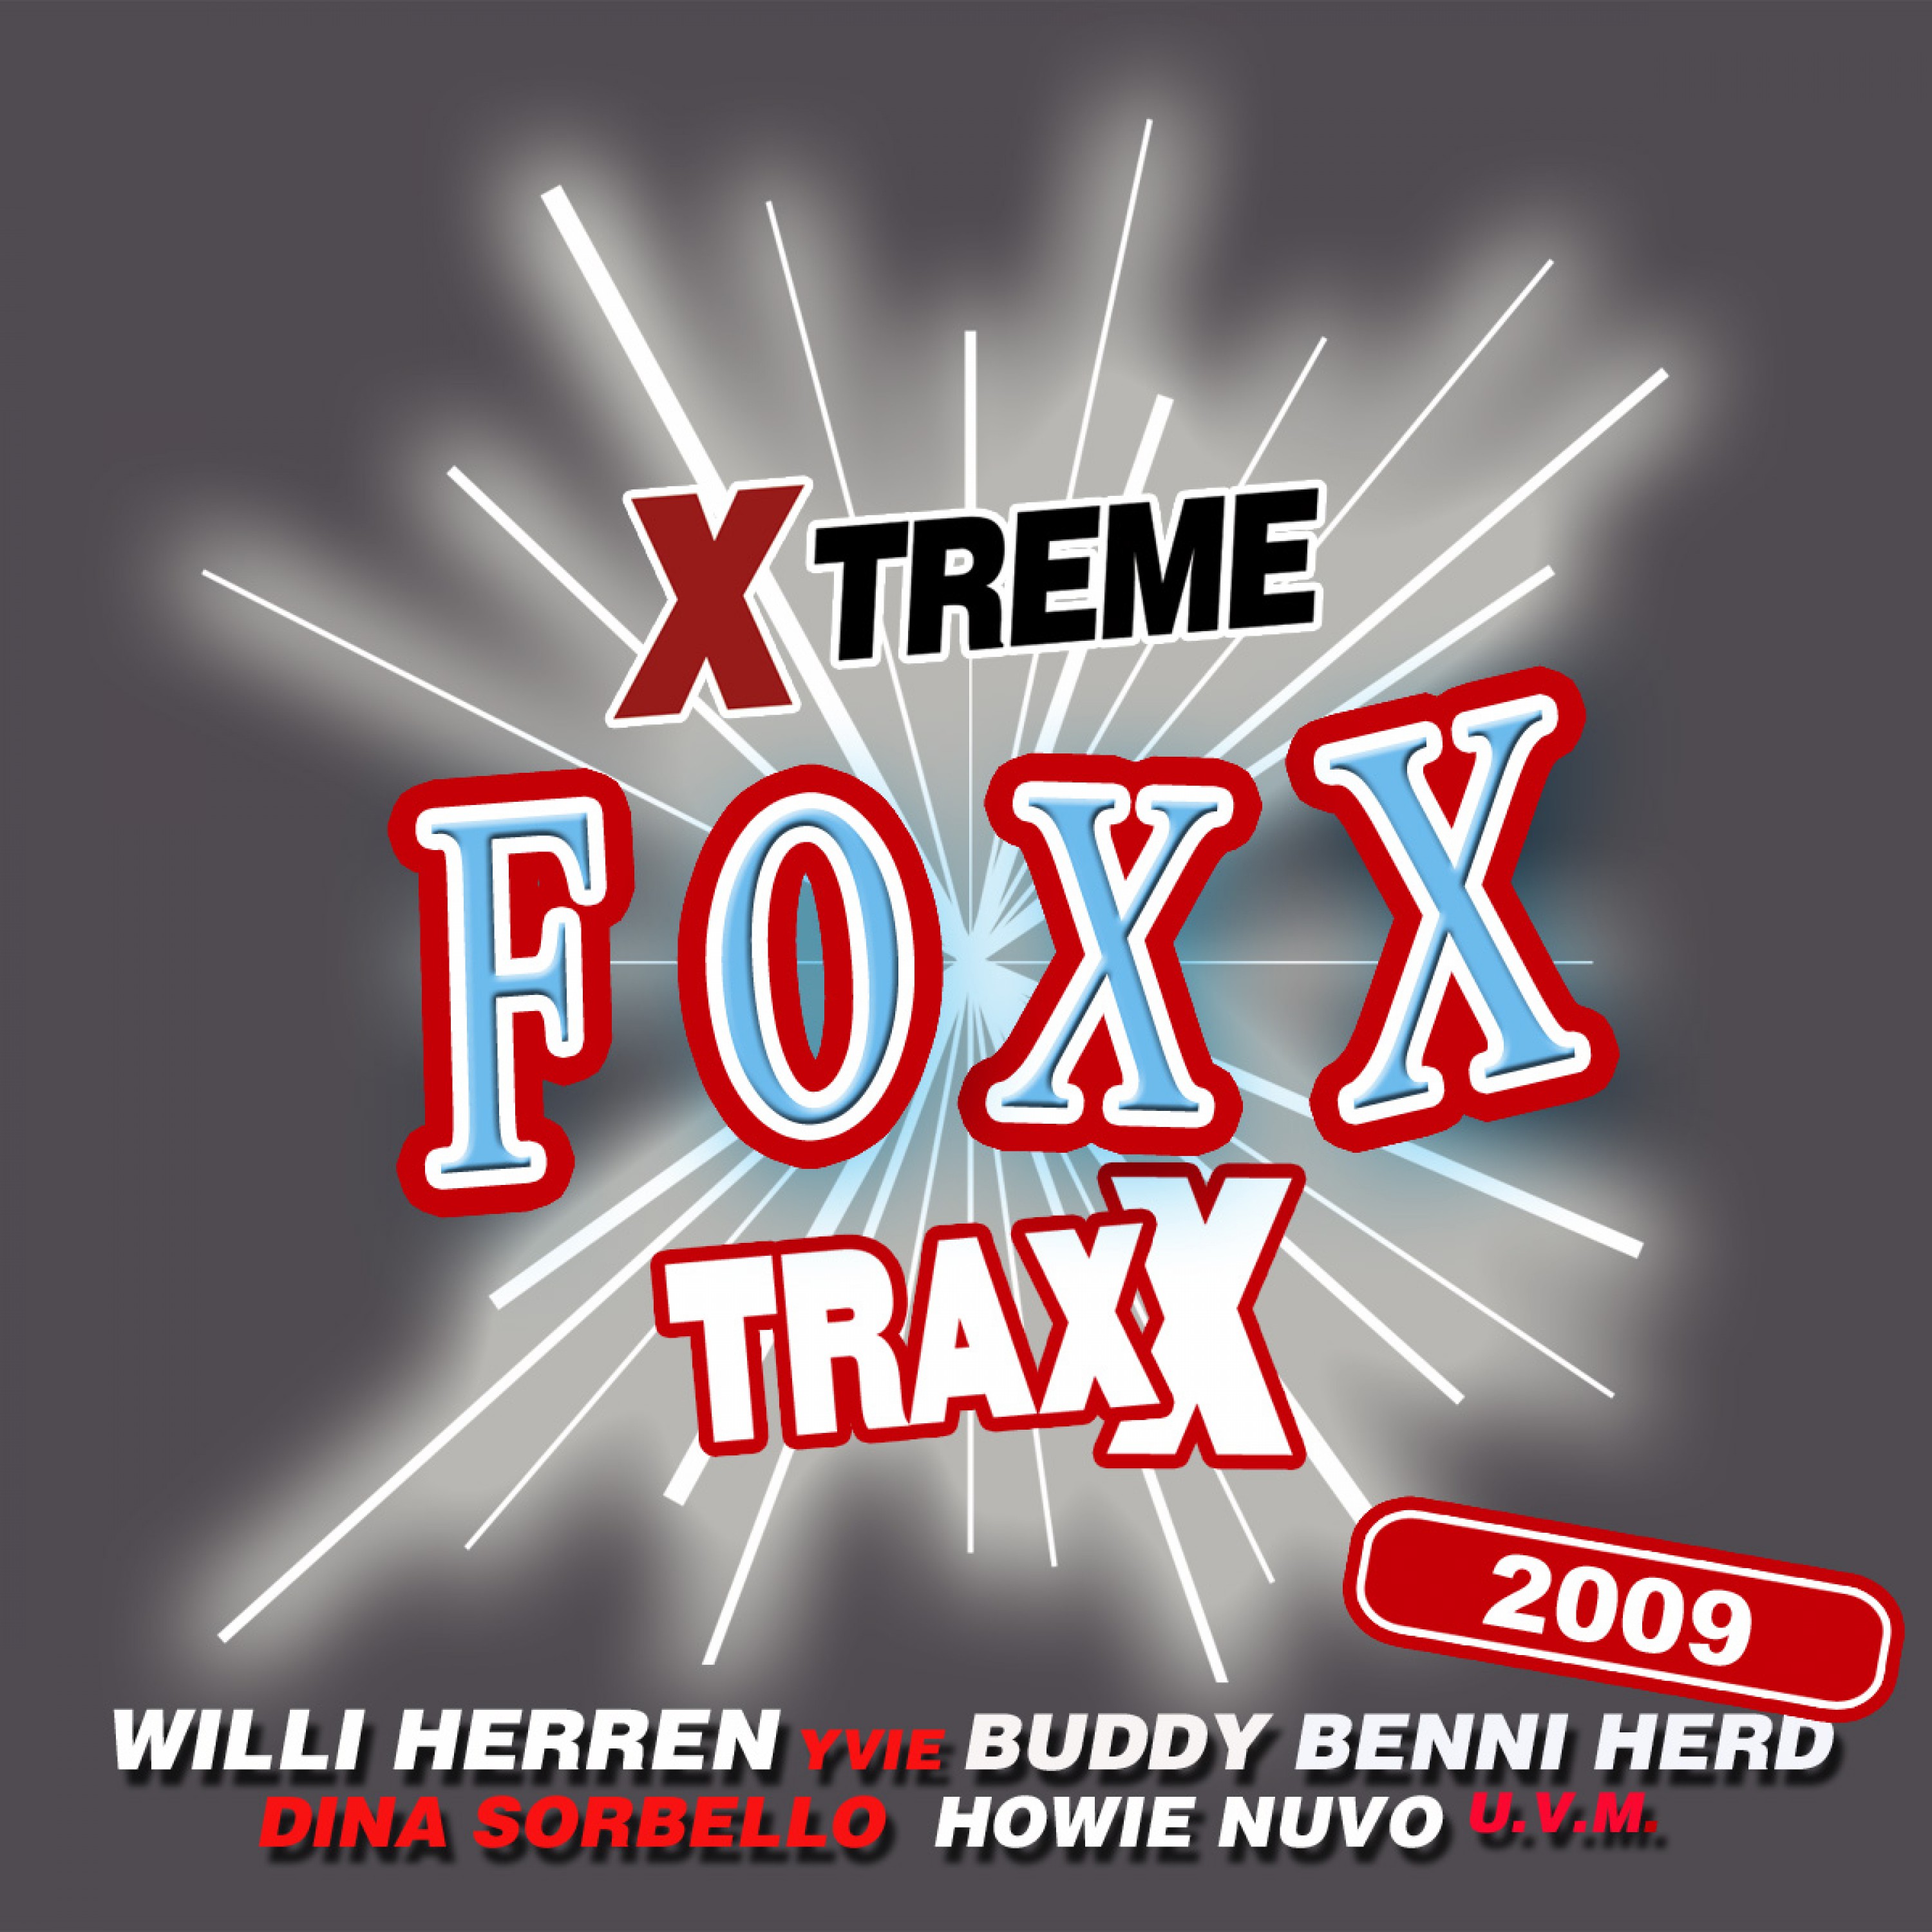 Xtreme Foxx Traxx